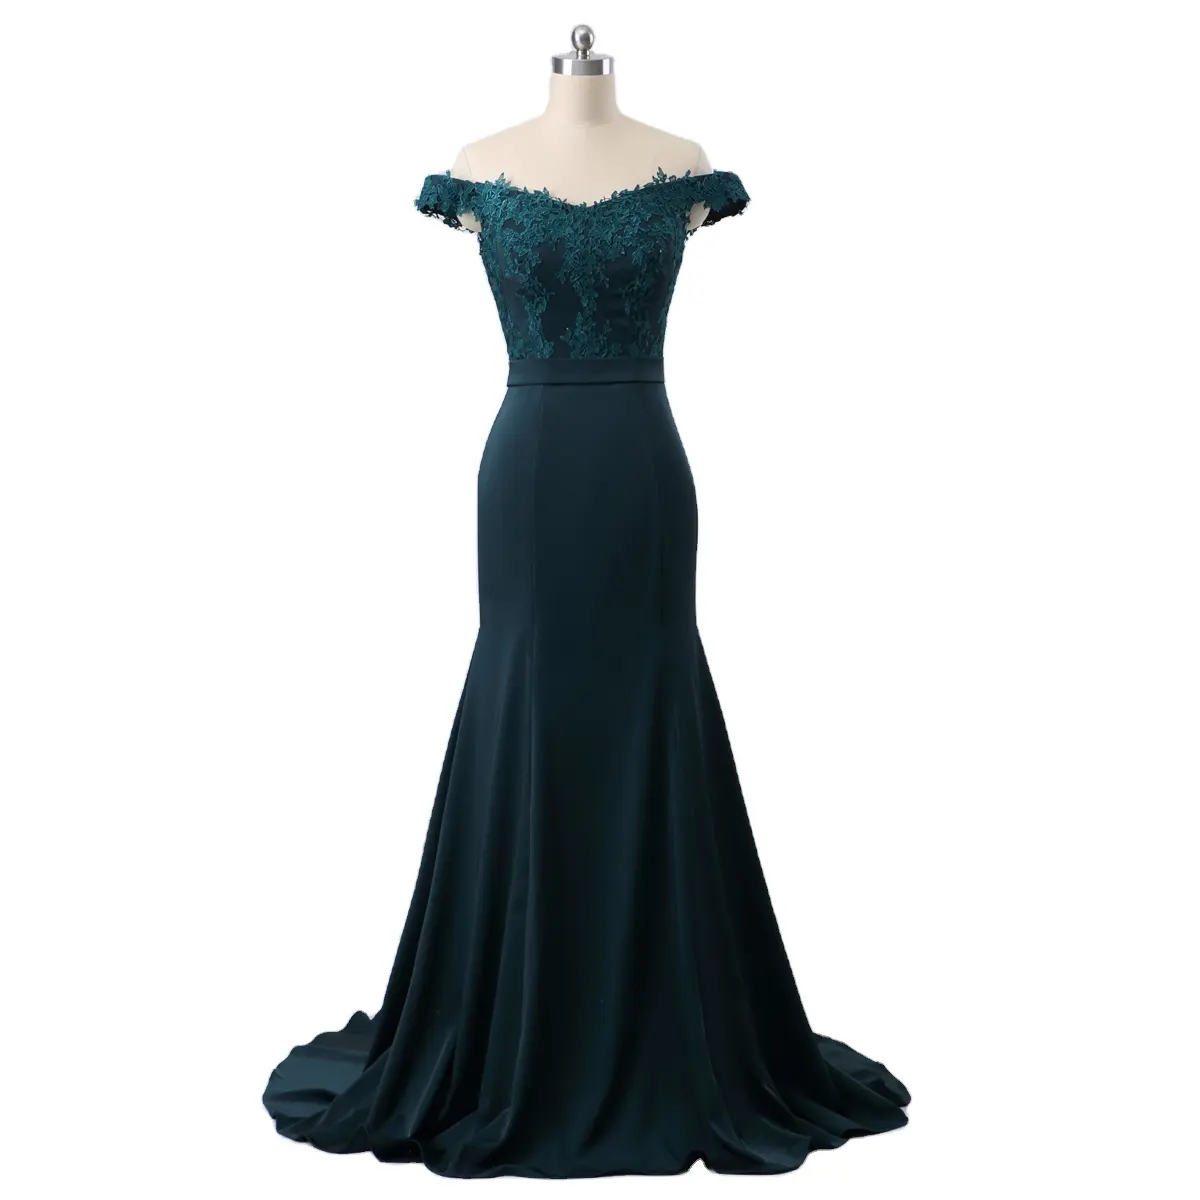 Teal crepe vestido para baile de sereia, novo design personalizado, vestido de dama de honra